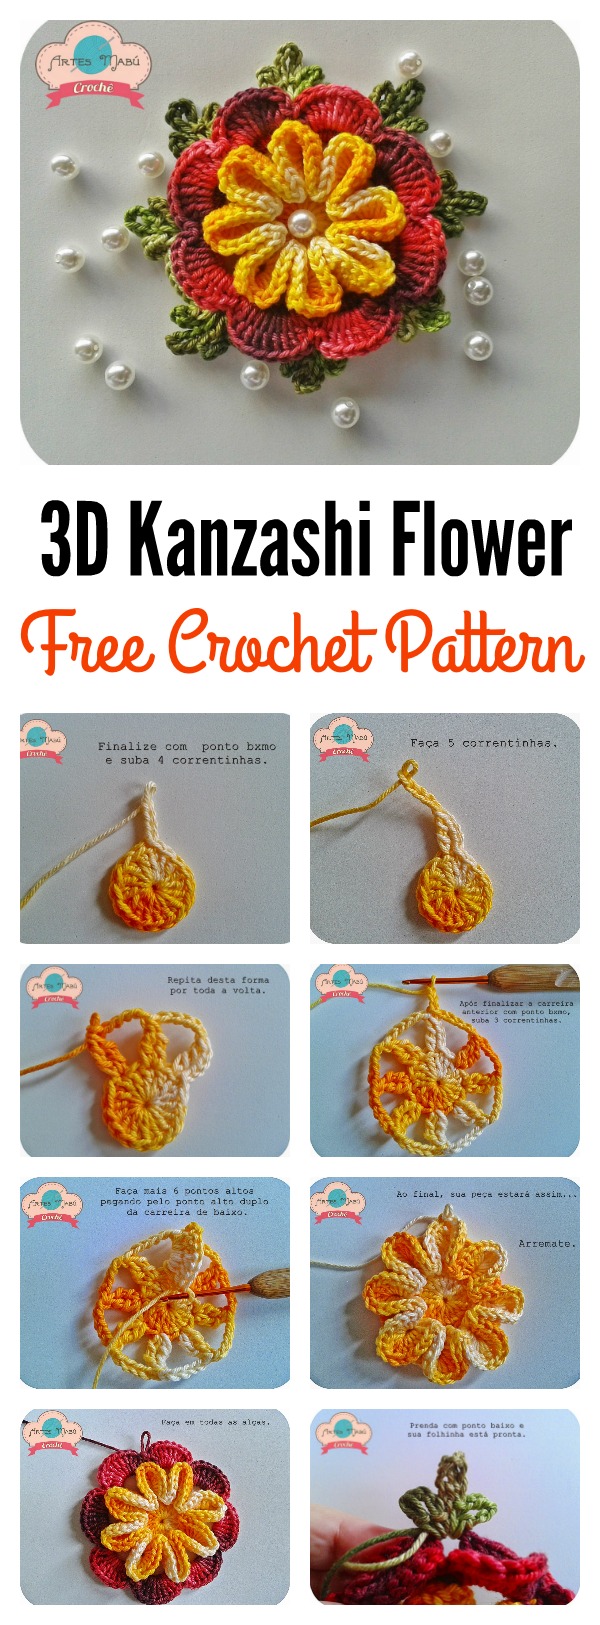 3D Kanzashi Flower Free Crochet Pattern